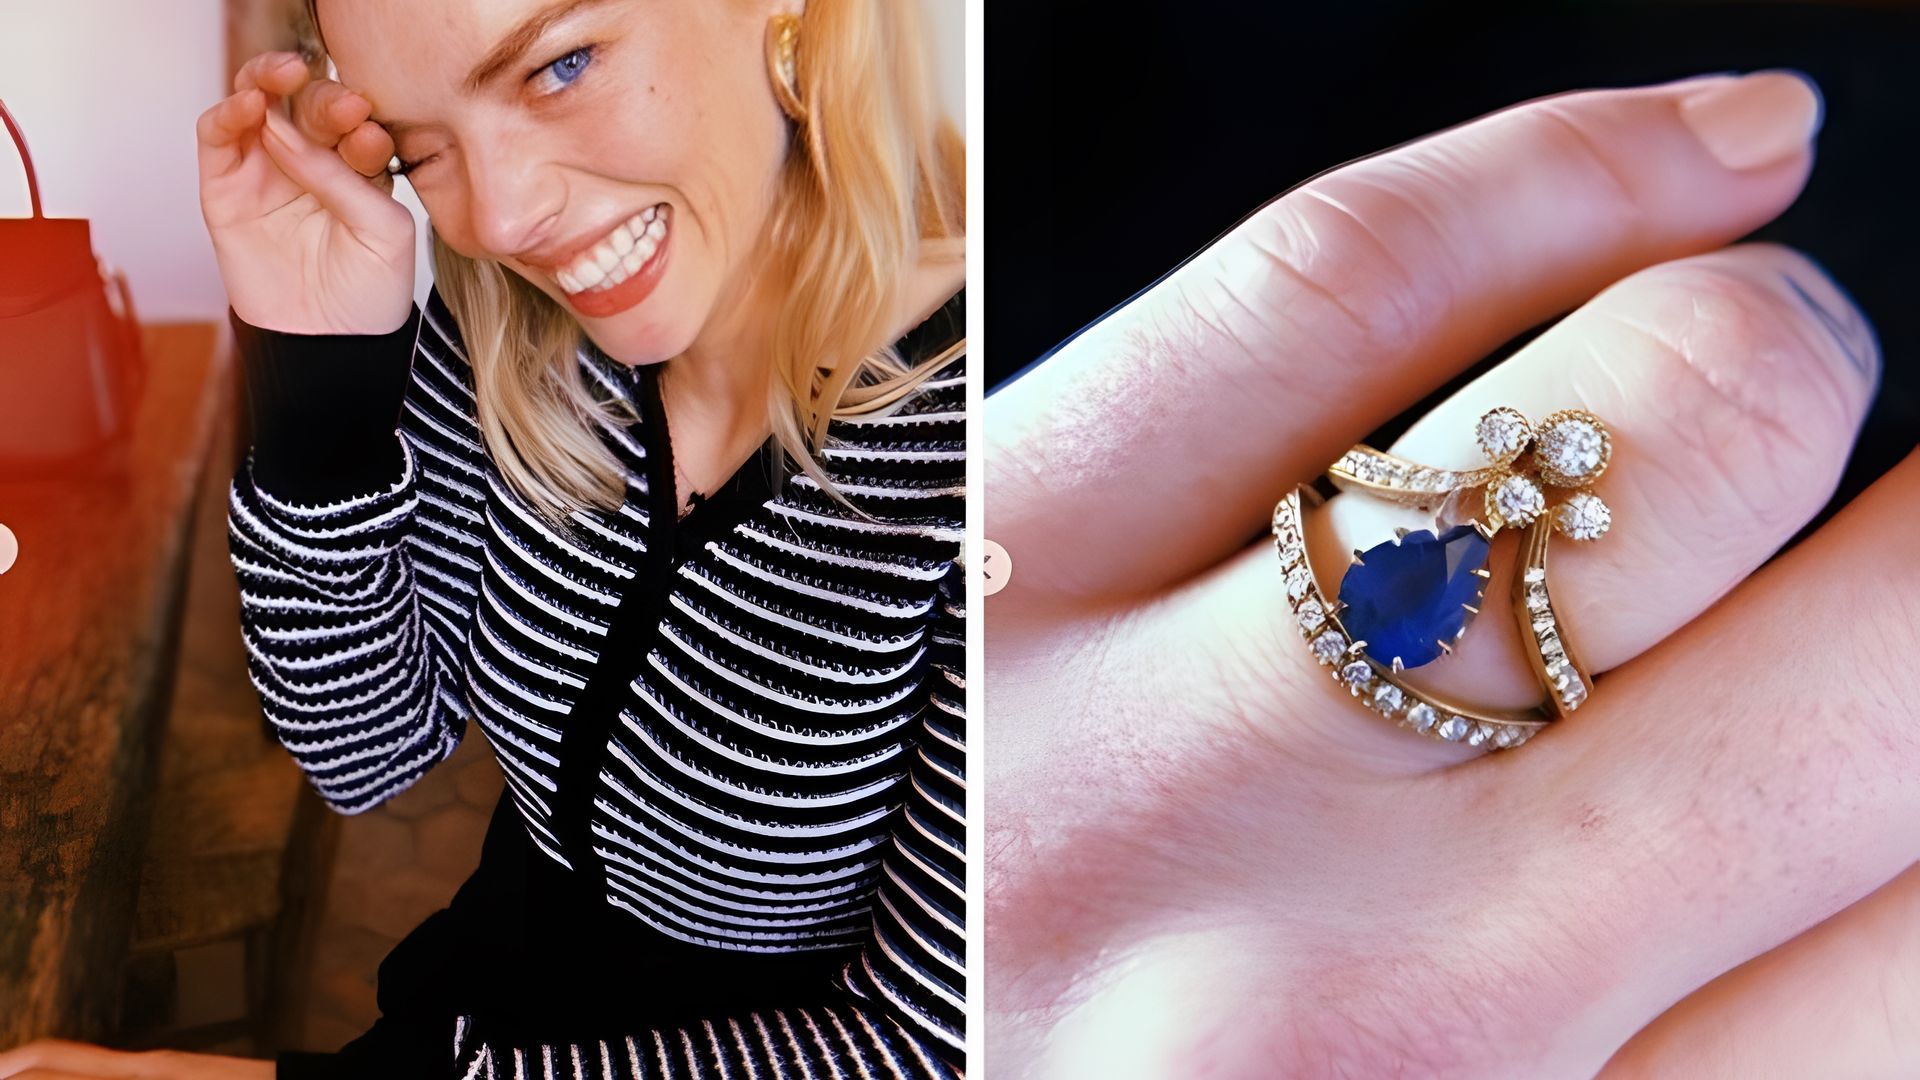 Samara's engagement ring